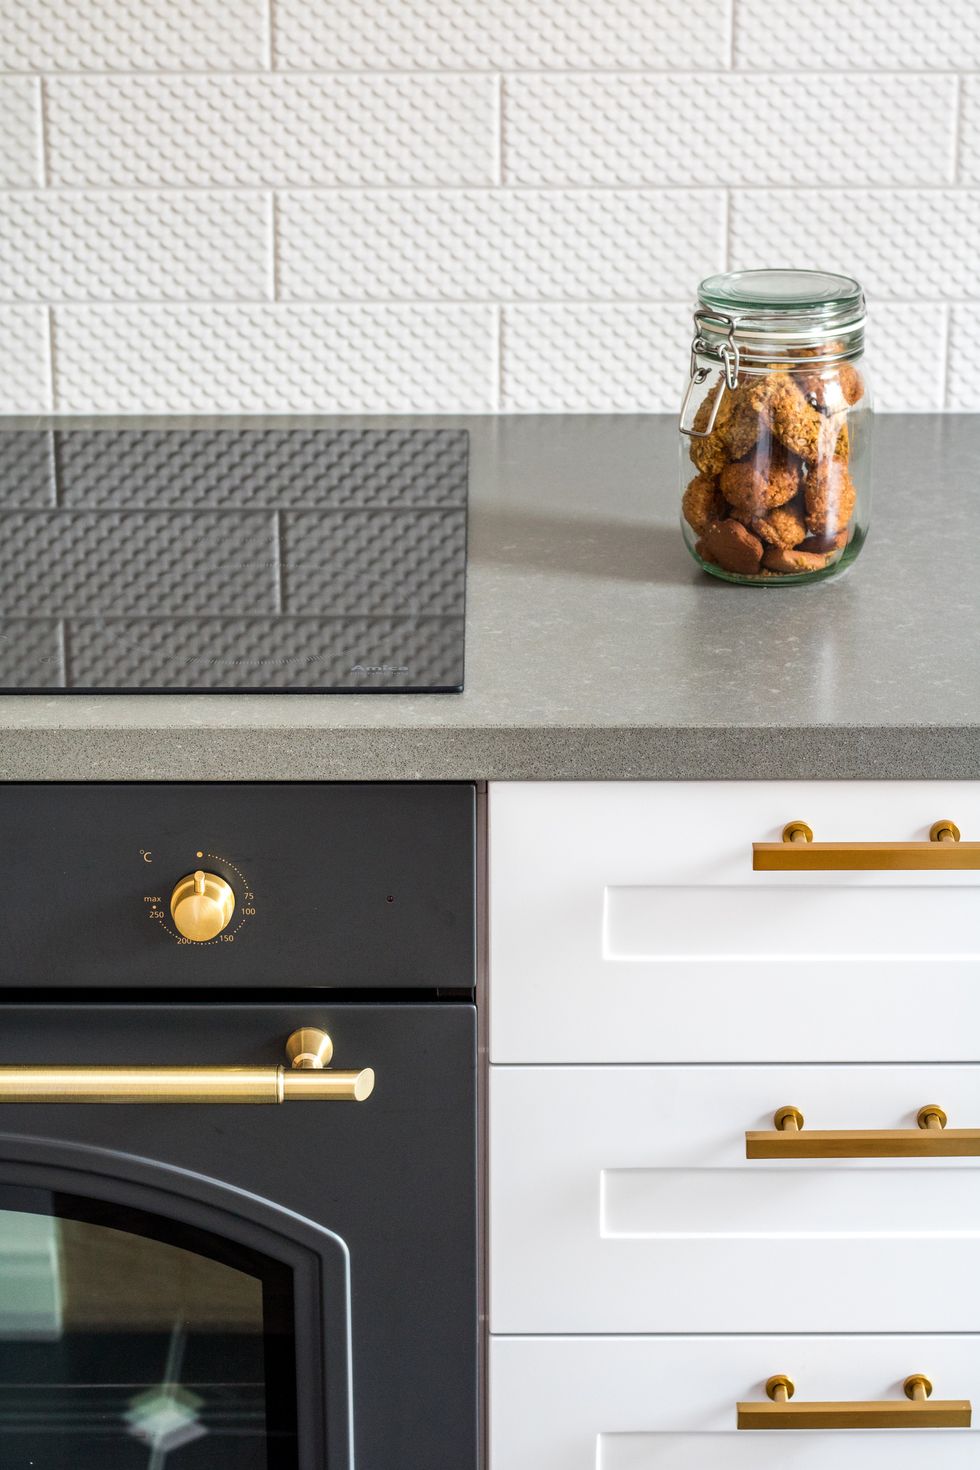 Copper kitchen cabinet handles